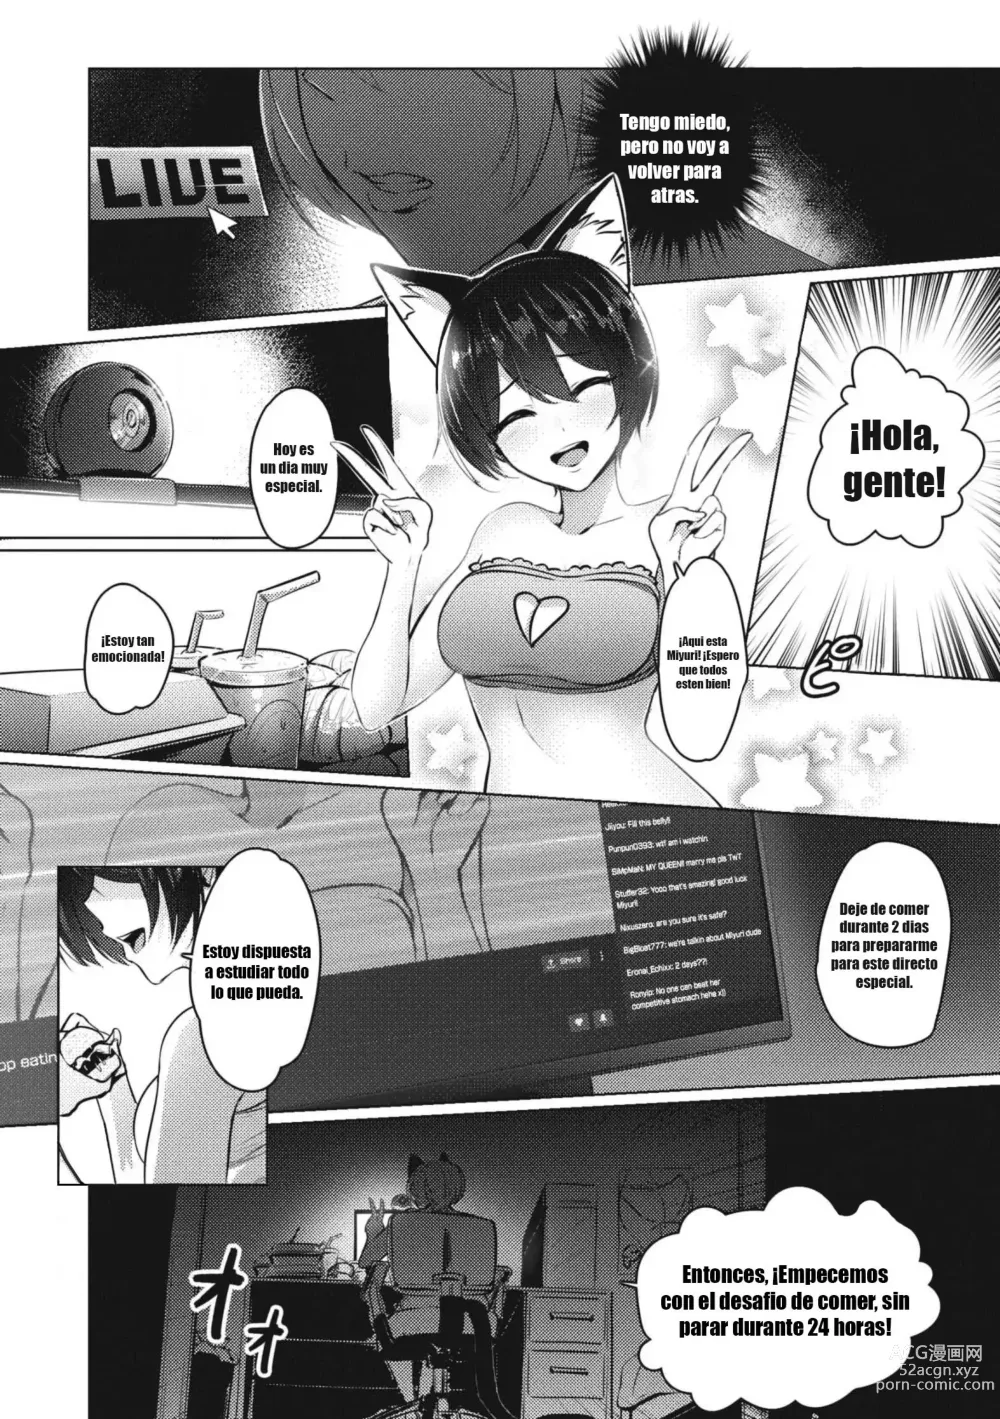 Page 2 of doujinshi 24H NONSTOP EATING.